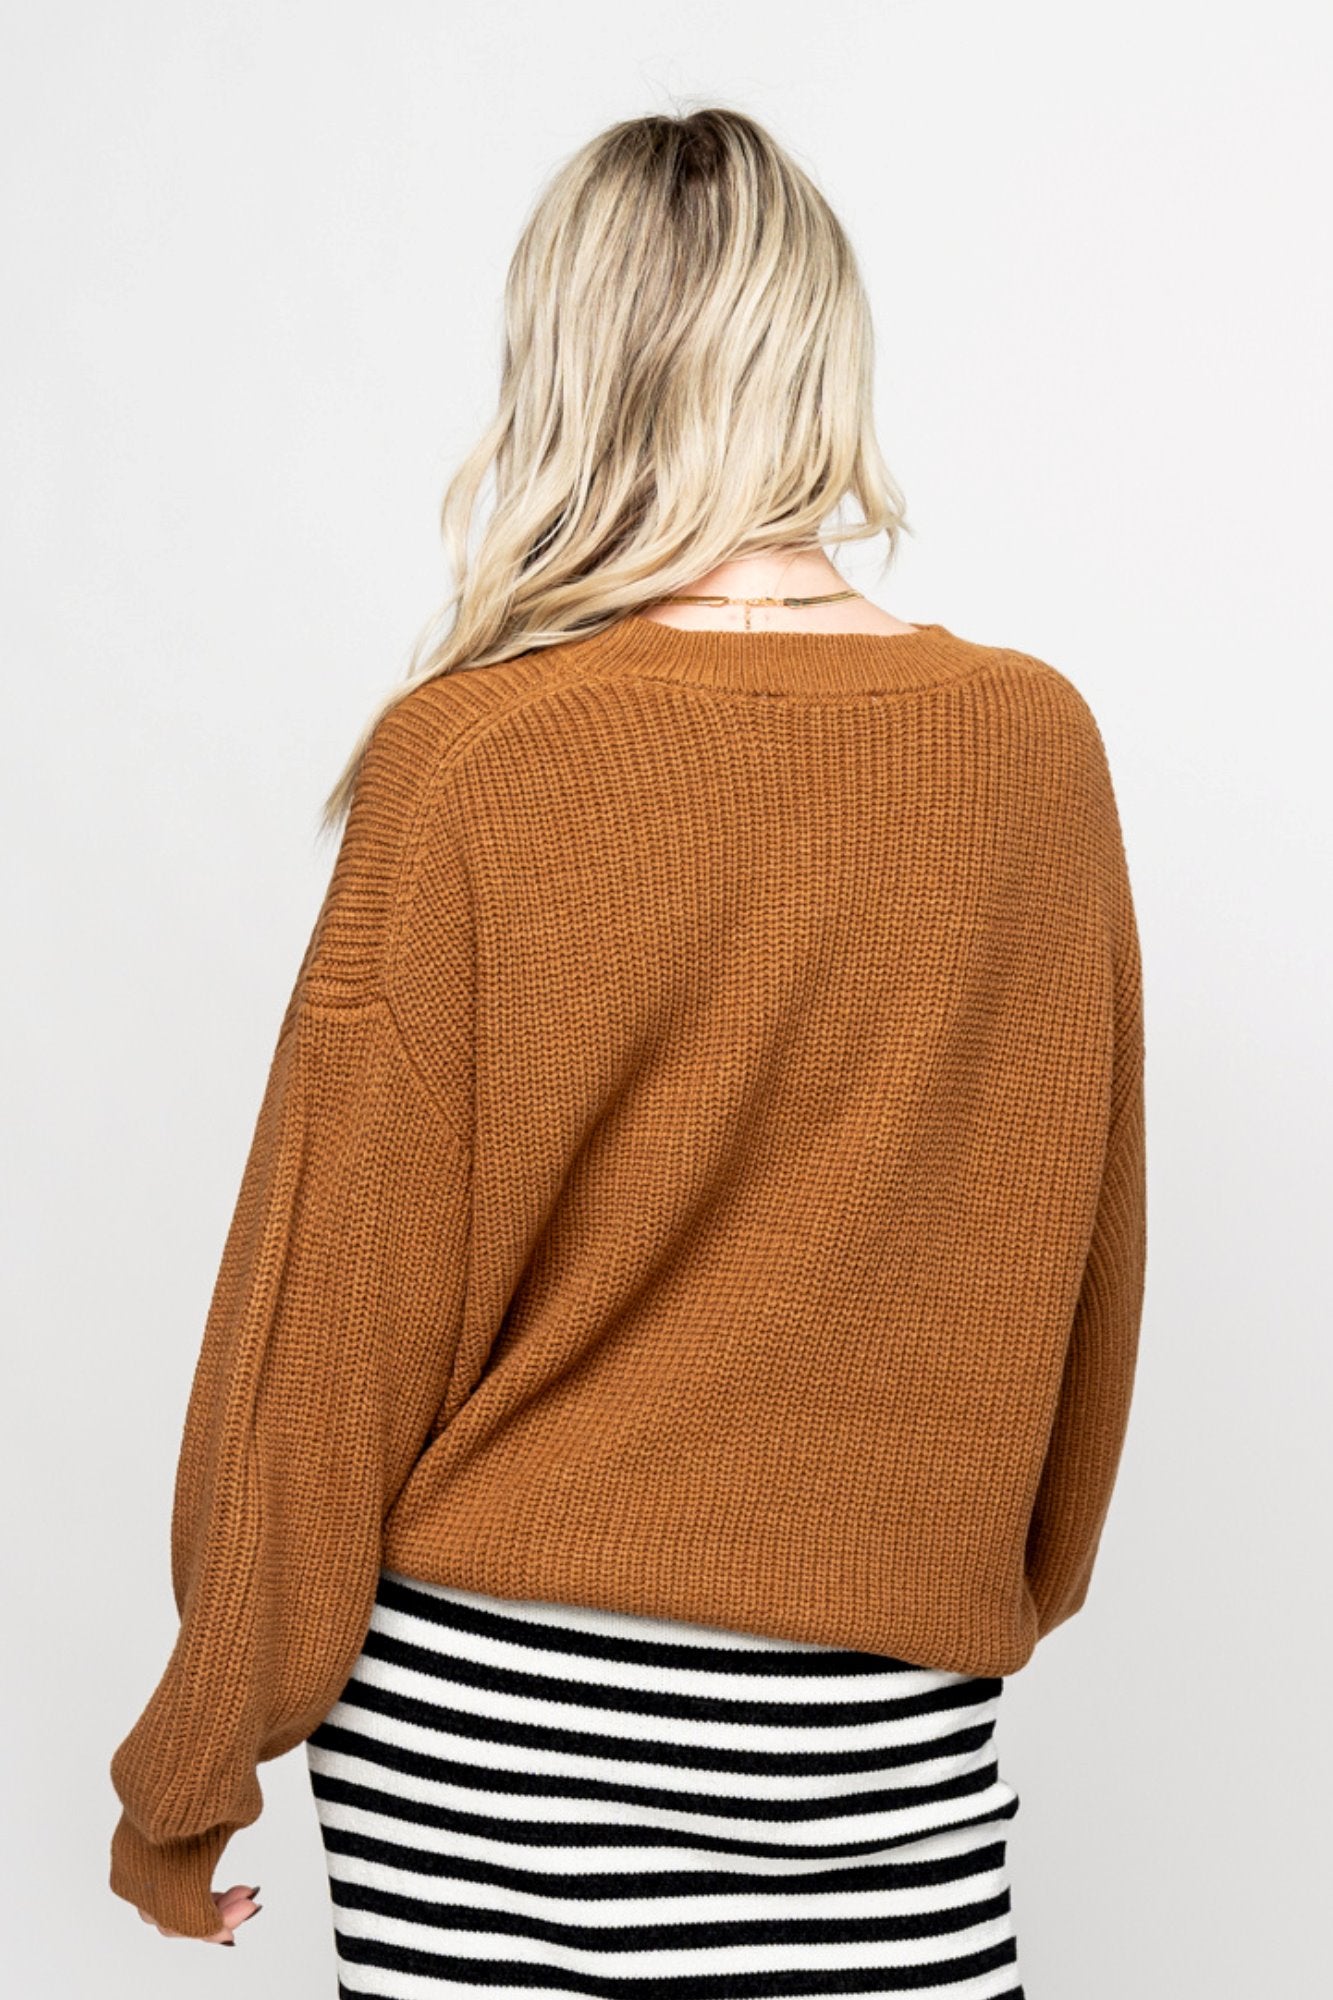 Branton Sweater in Caramel Holley Girl 